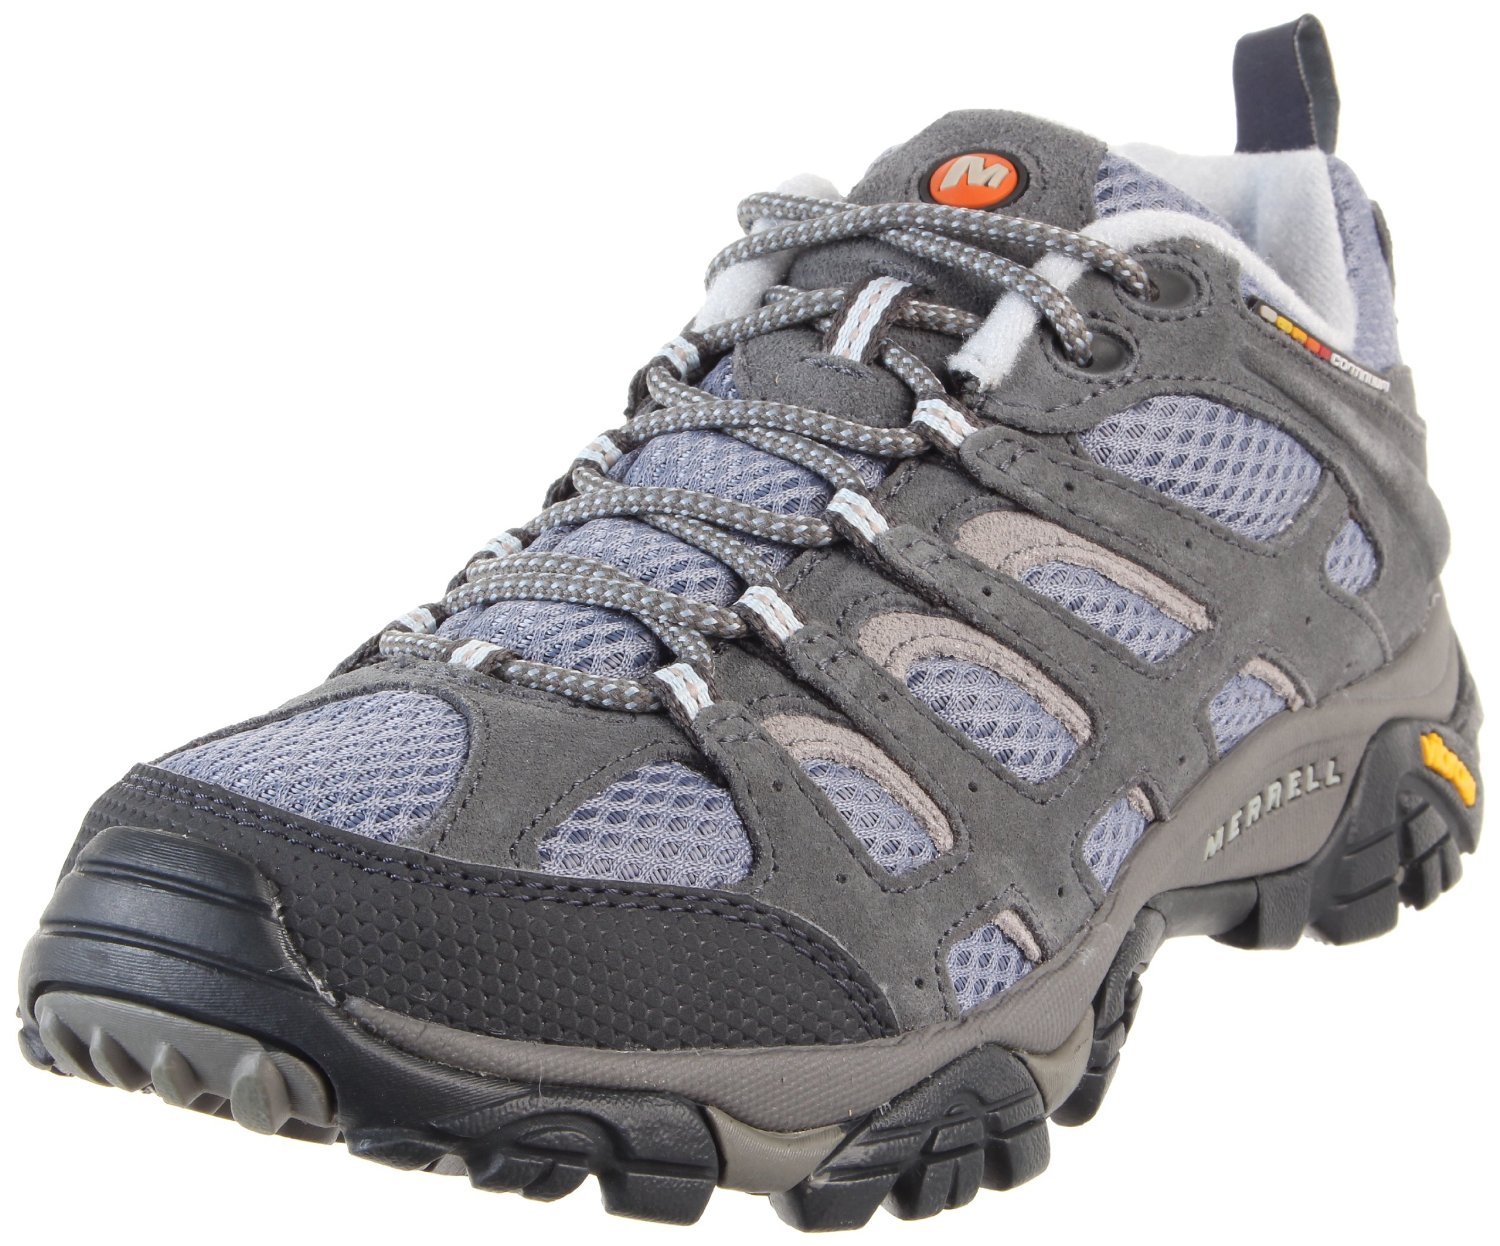 Hiking Shoes Here: Merrell Moab Ventilator Low Women's Hiking Shoes